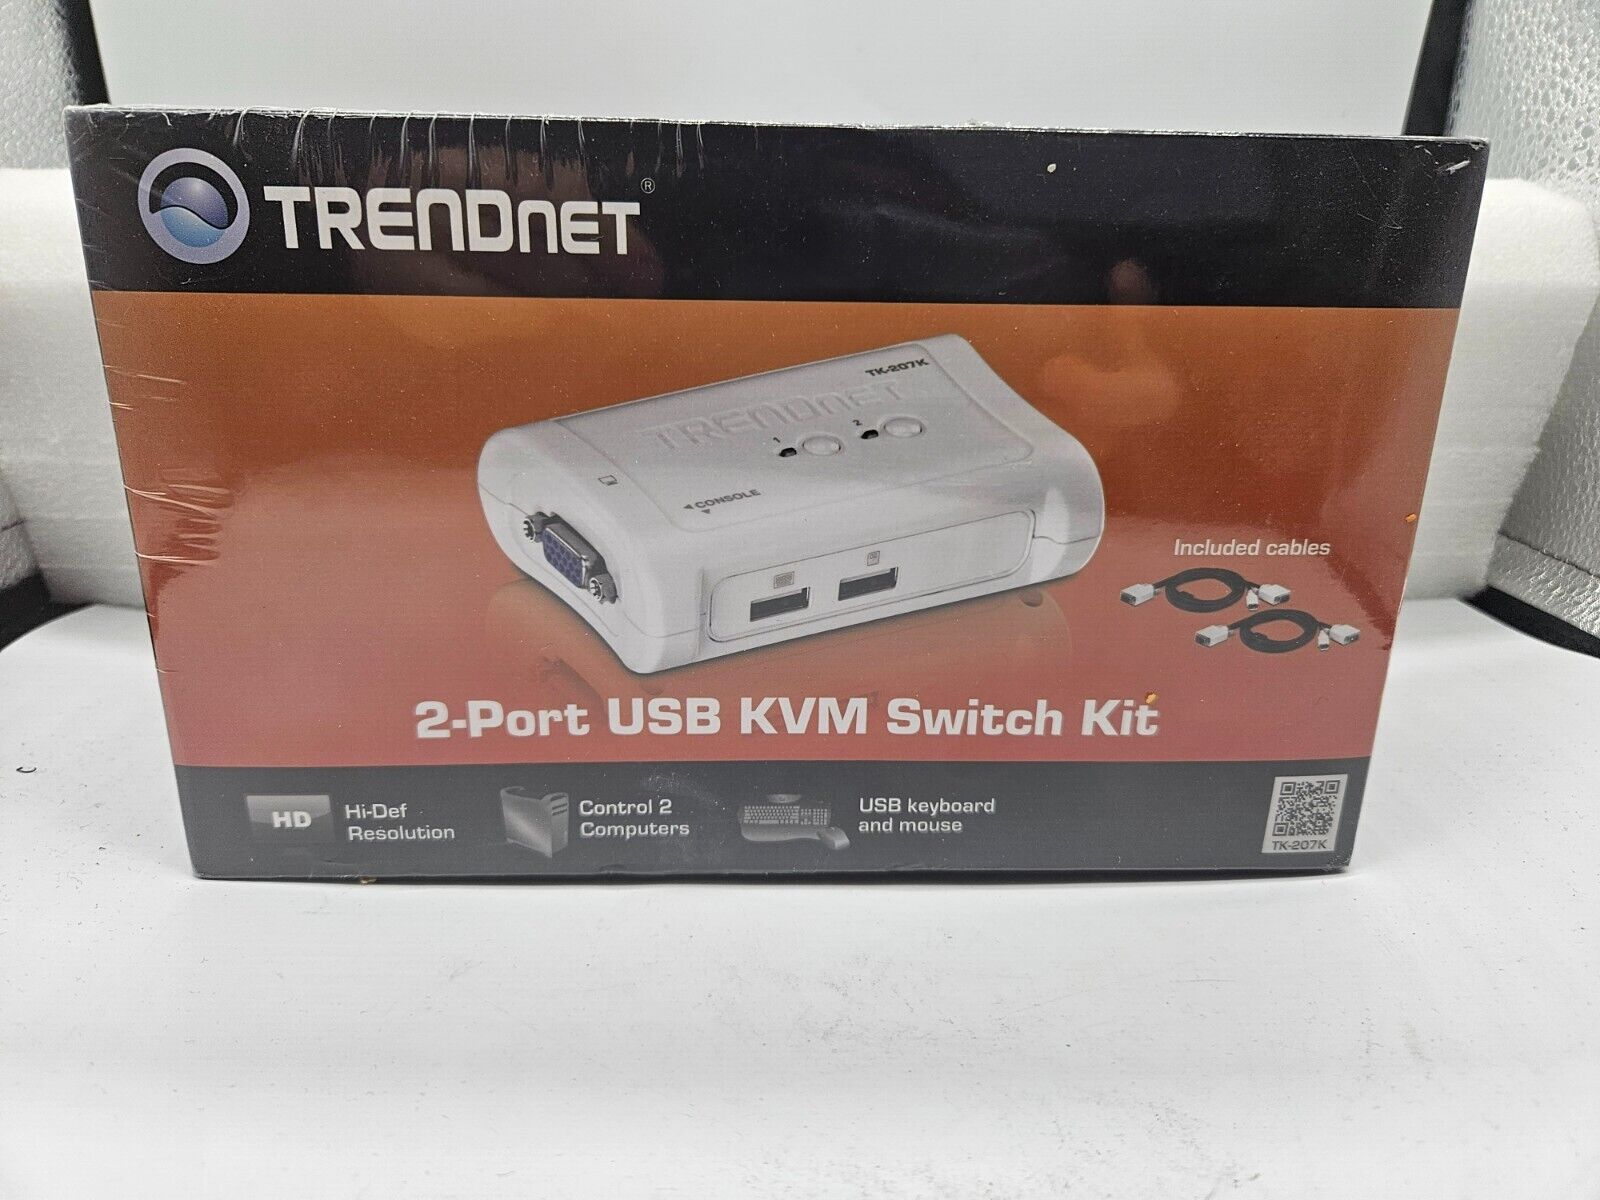 TRENDnet 2-Port USB KVM Switch